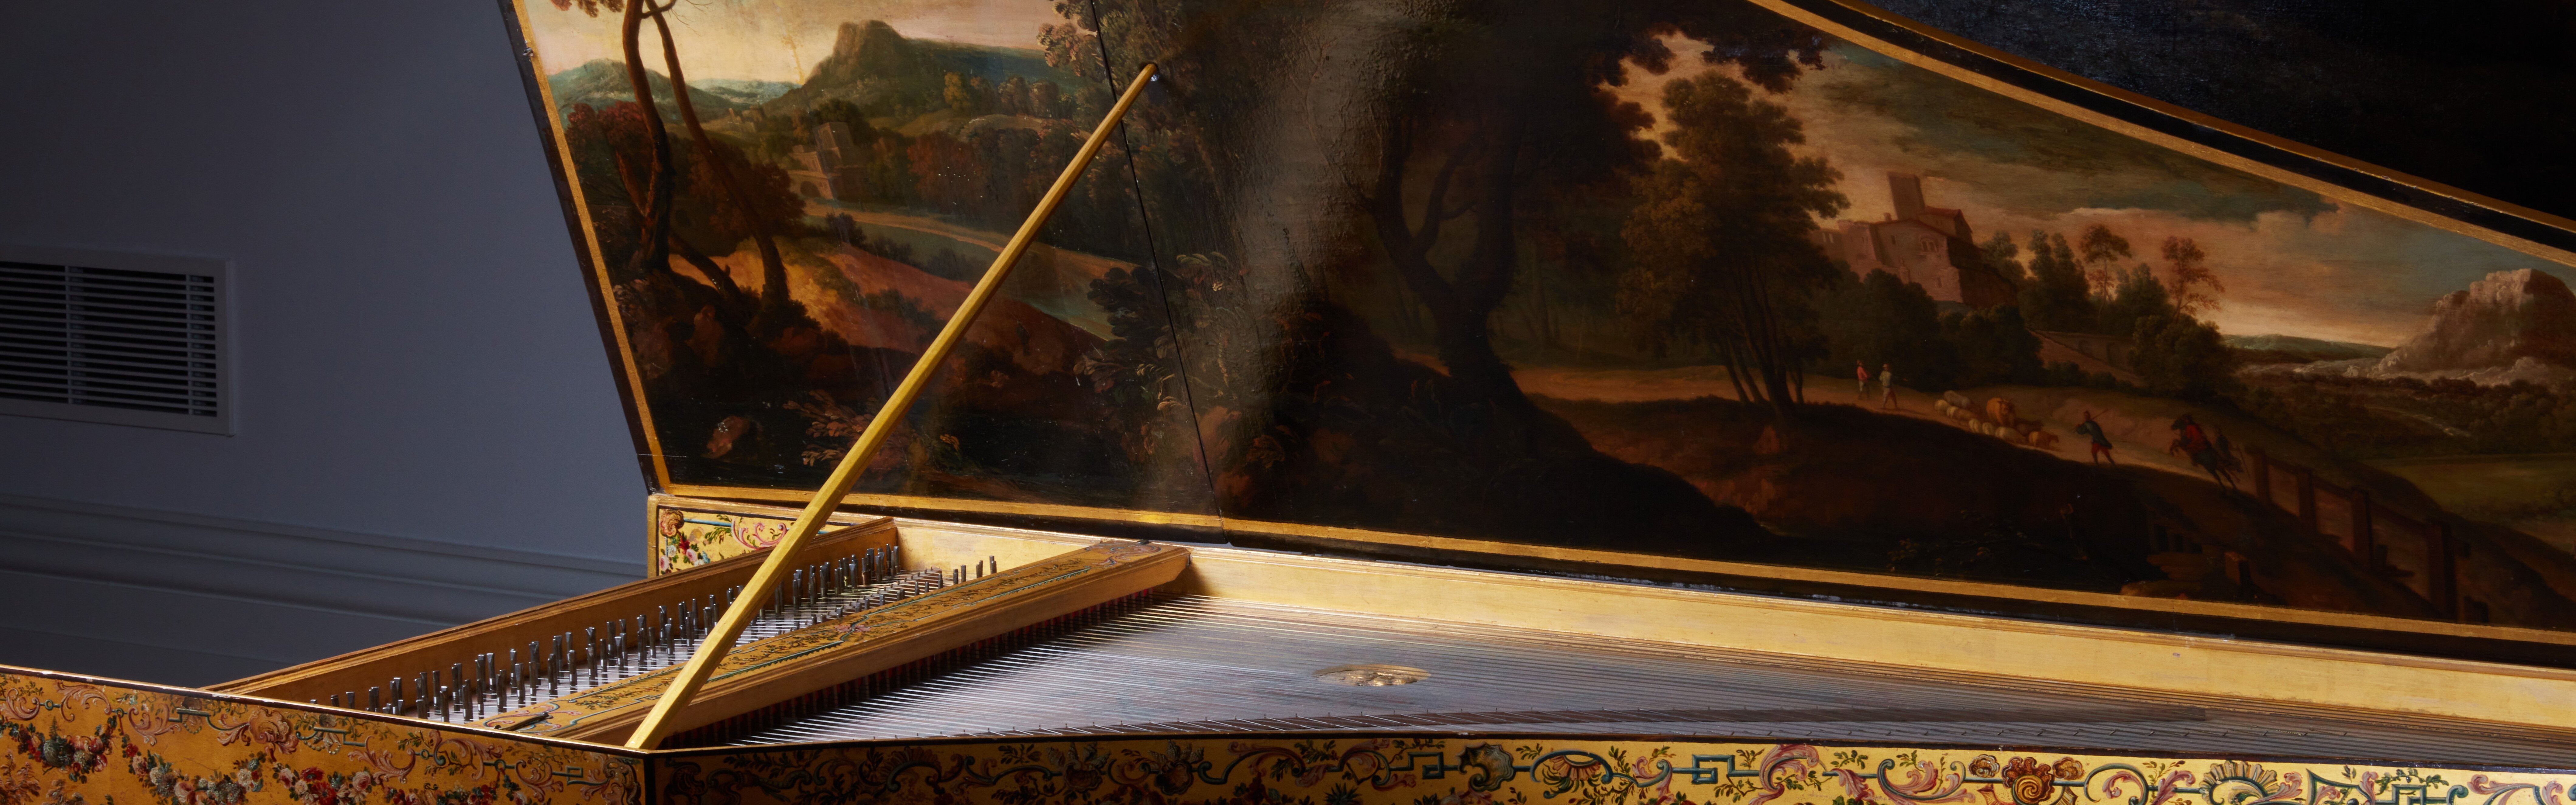 The Ruckers harpsichord